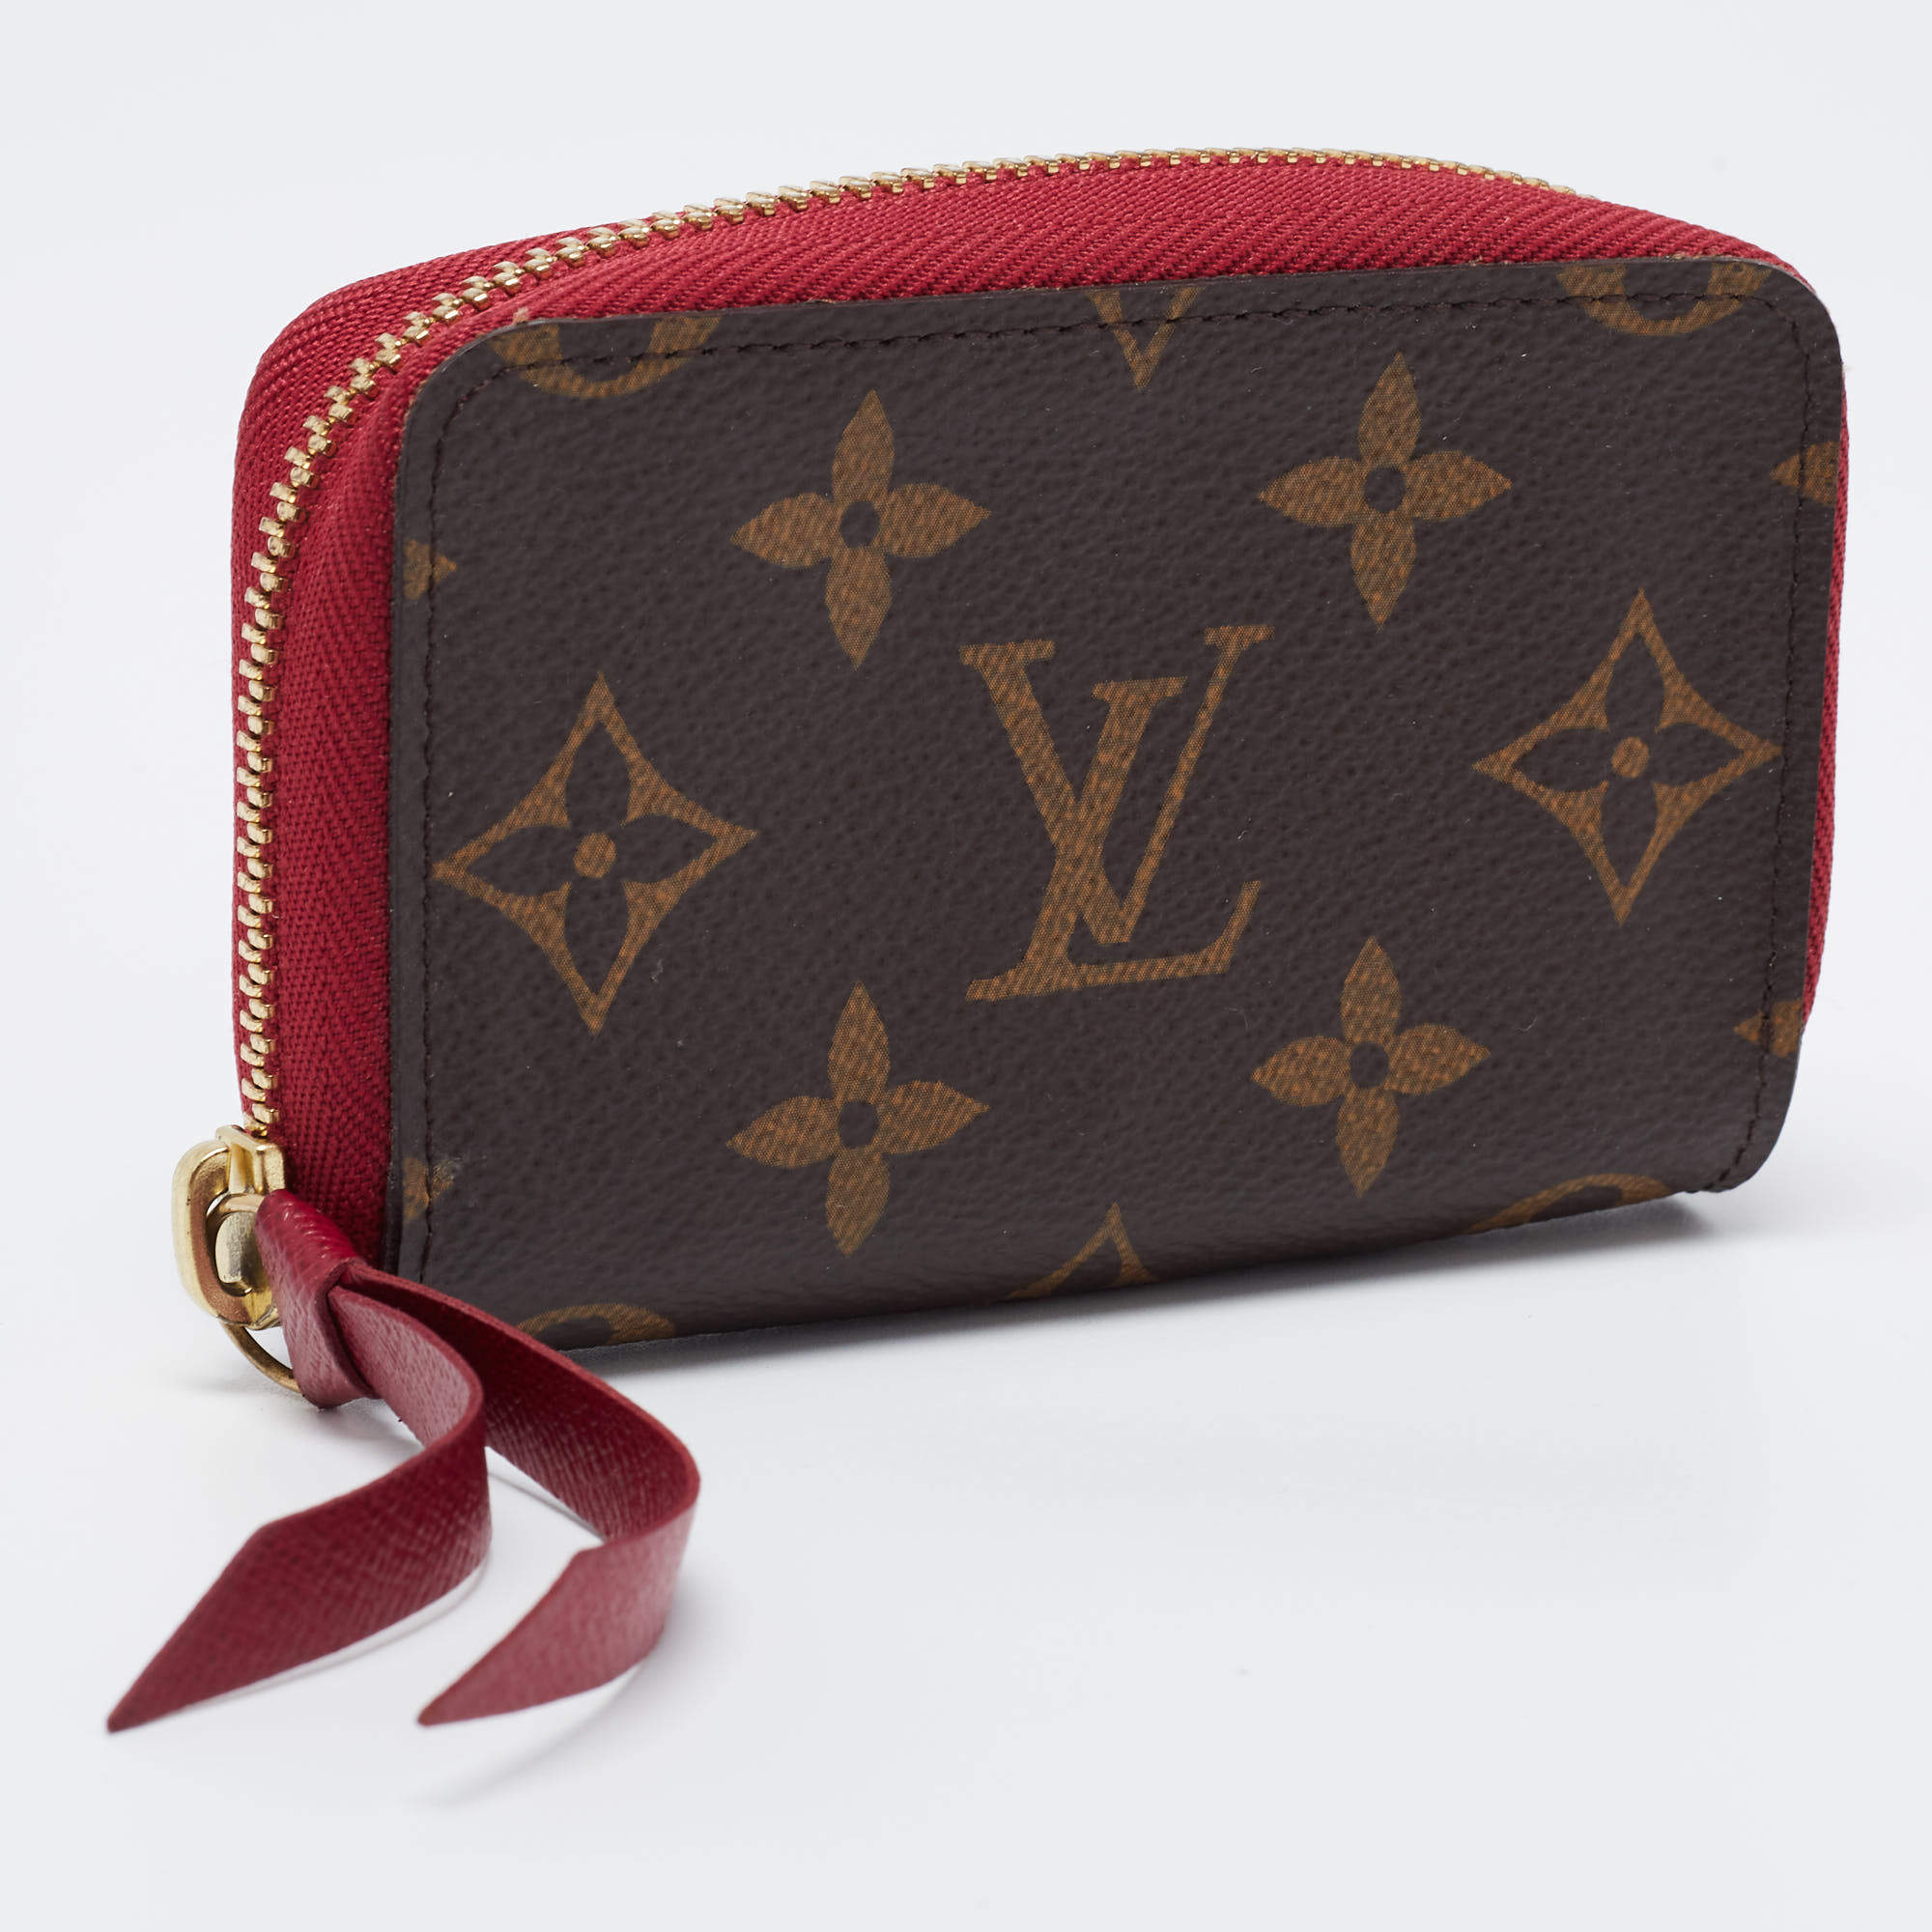 Louis Vuitton Zippy Multicarte in Fuschia and Monogram - SOLD